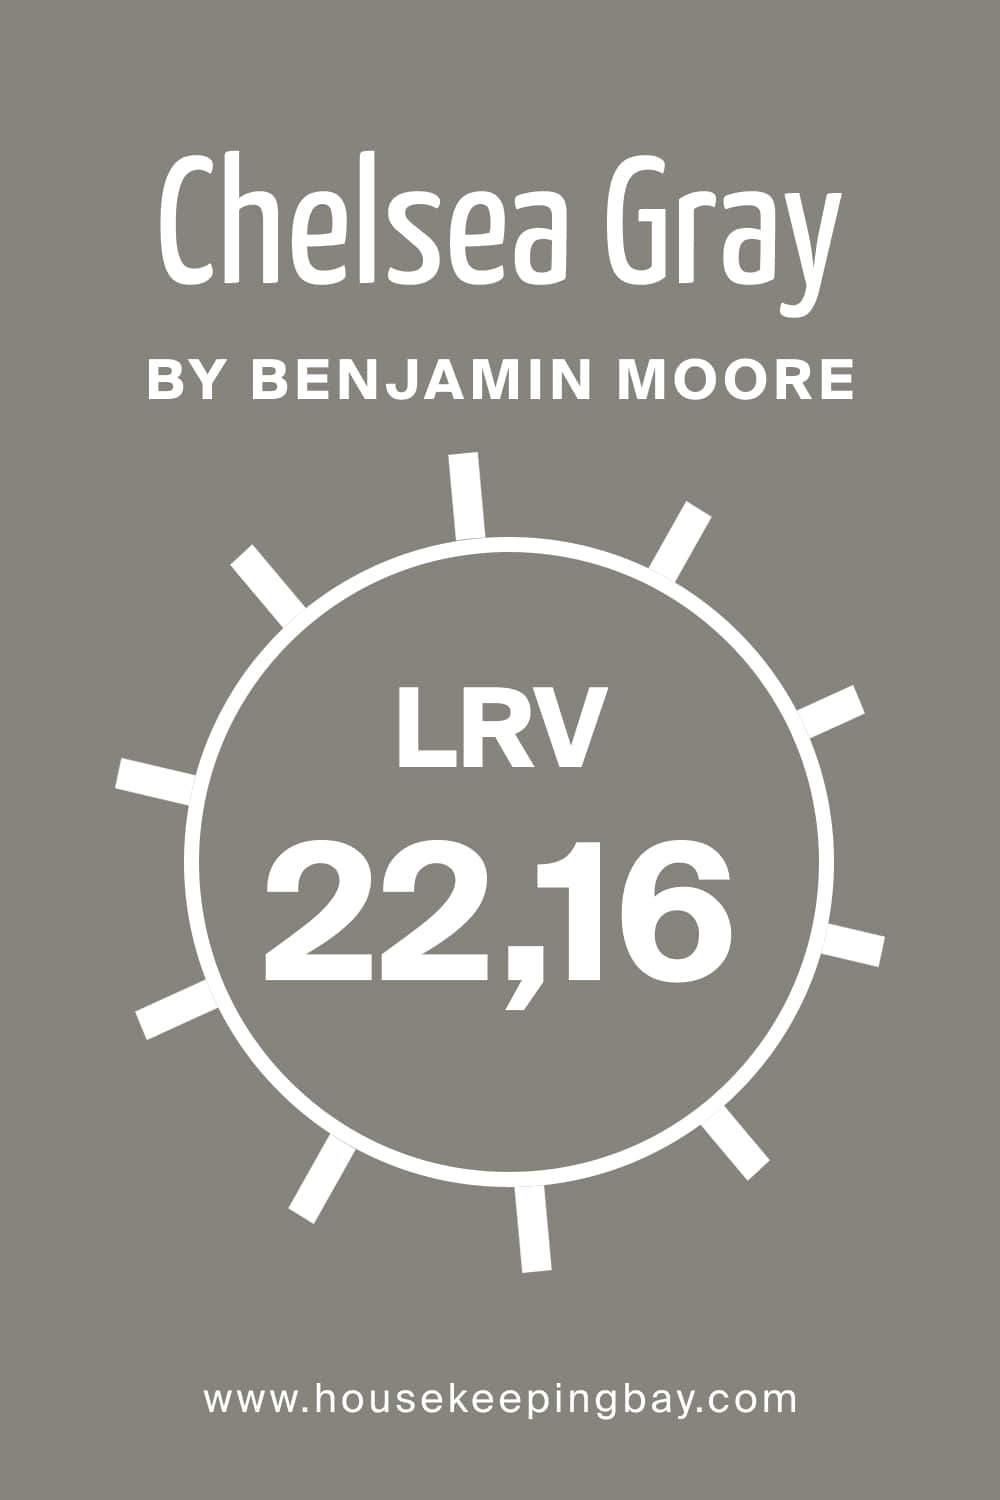 Chelsea Gray HC 168 by Benjamin Moore. LRV – 22,16